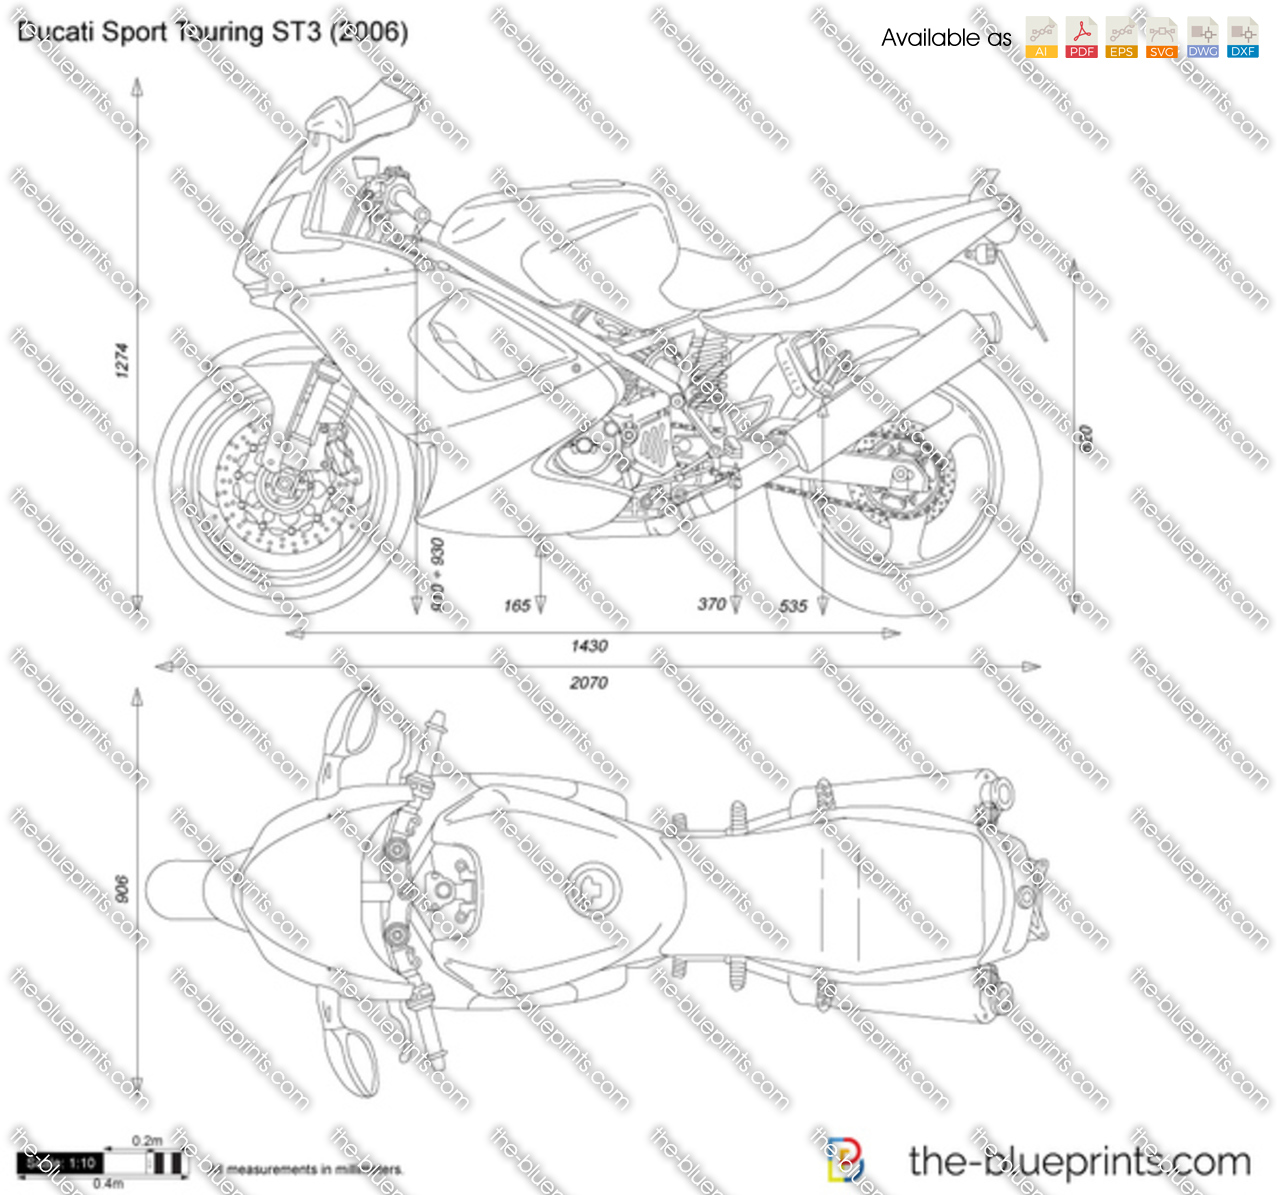 Ducati Sport Touring ST3